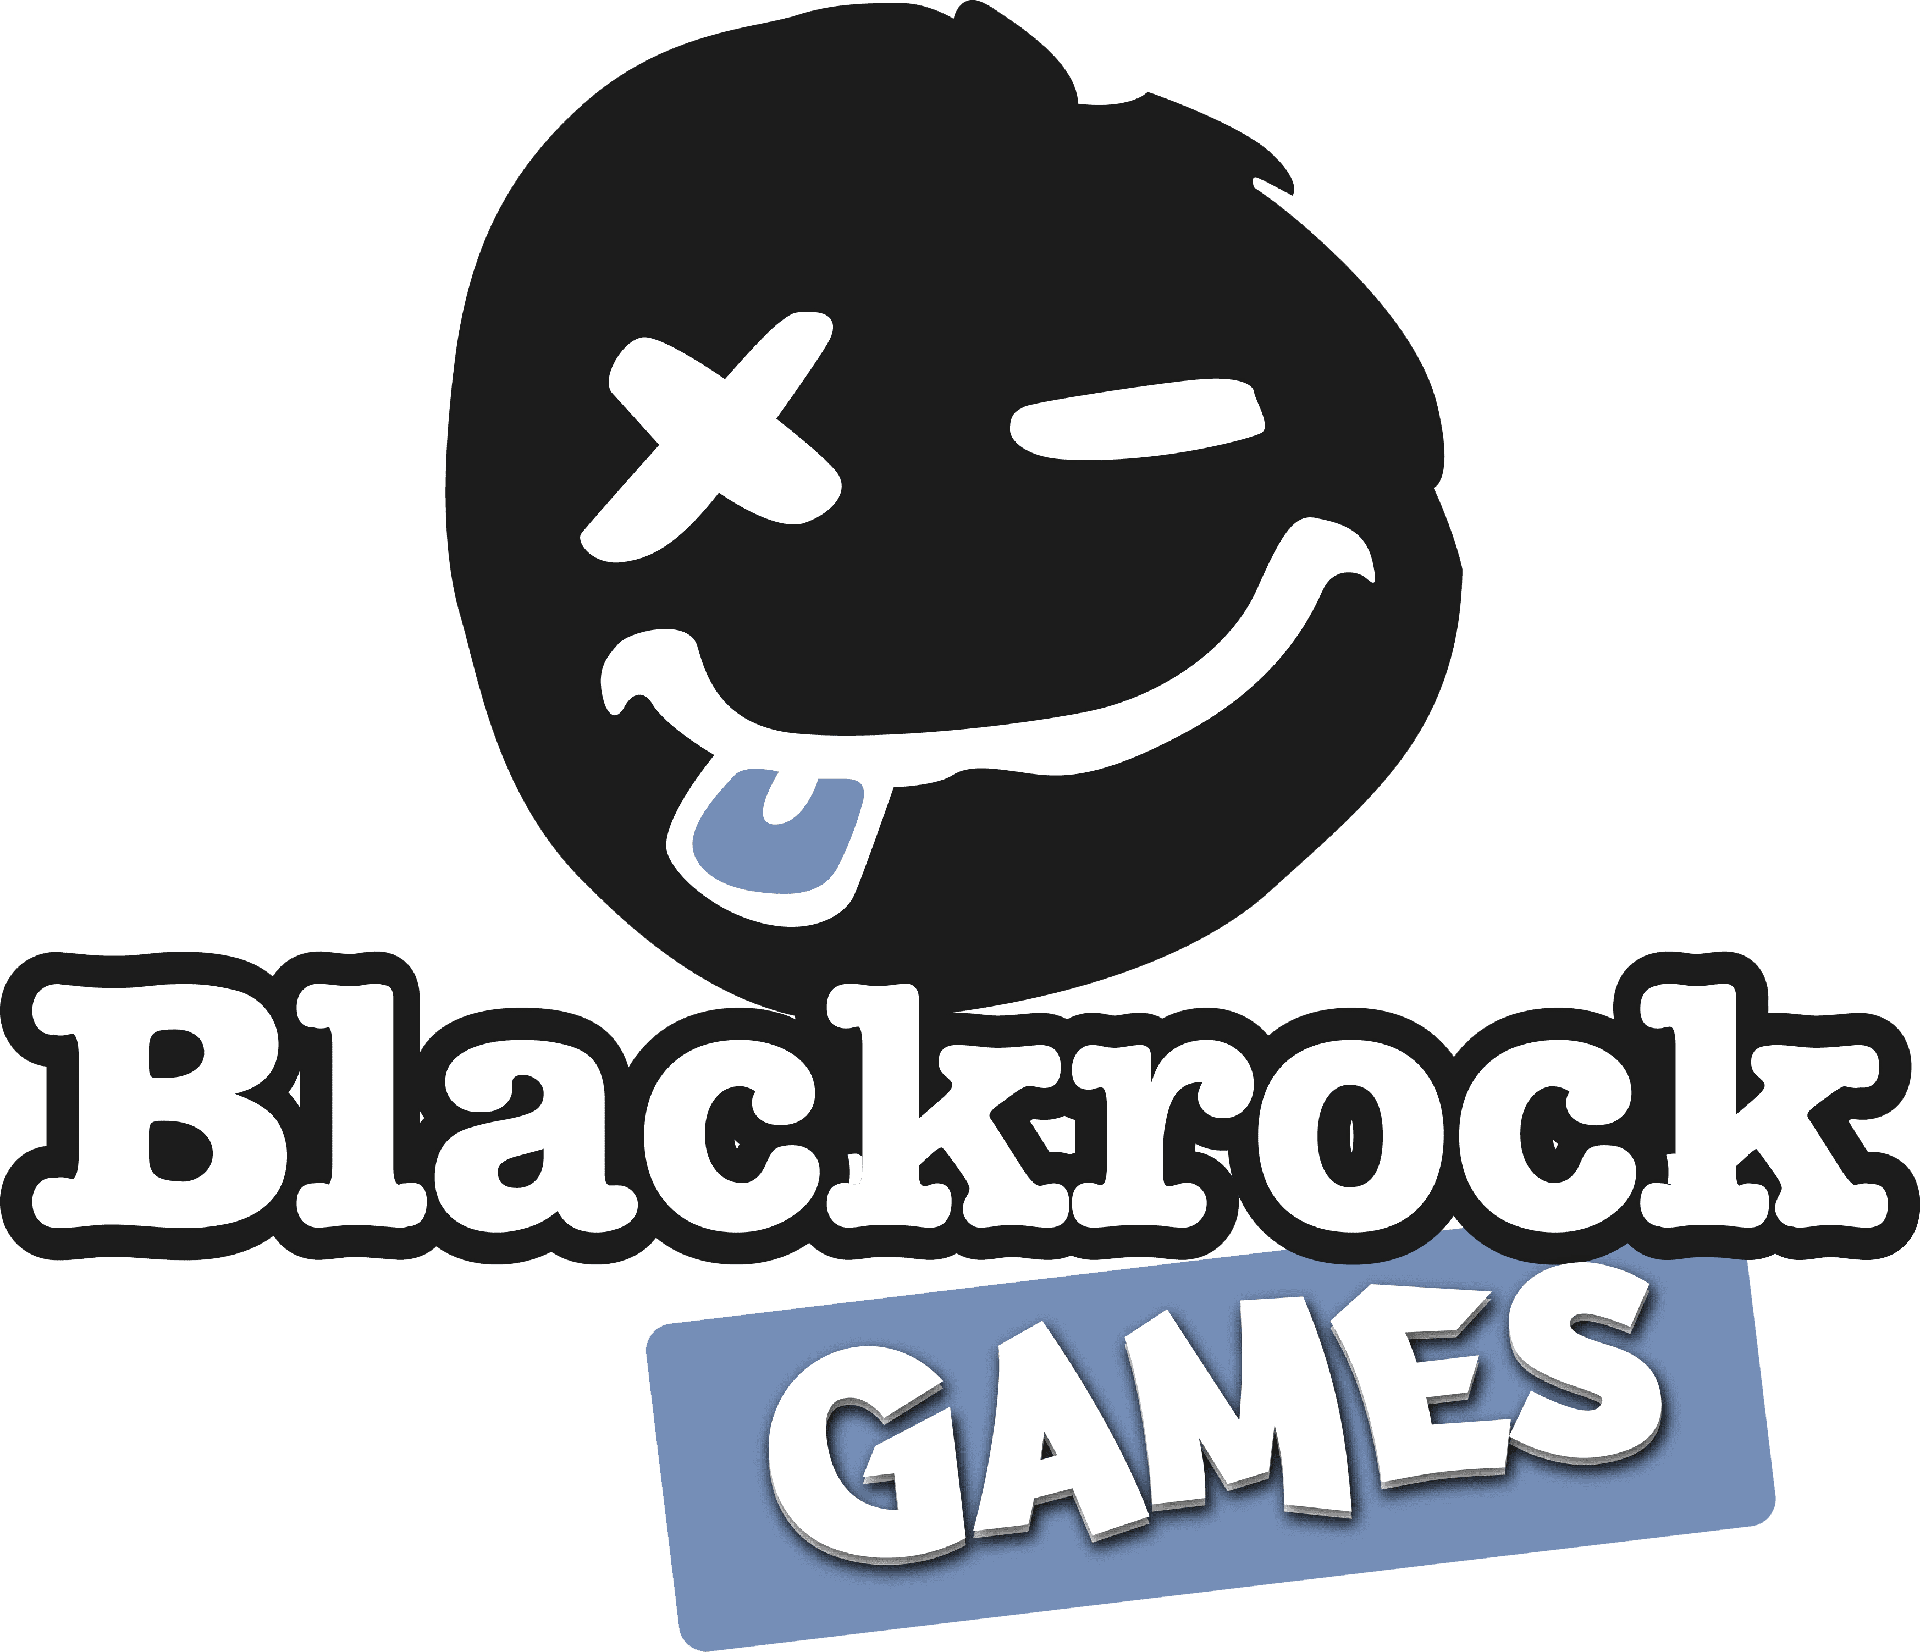 Brand: Blackrock Games